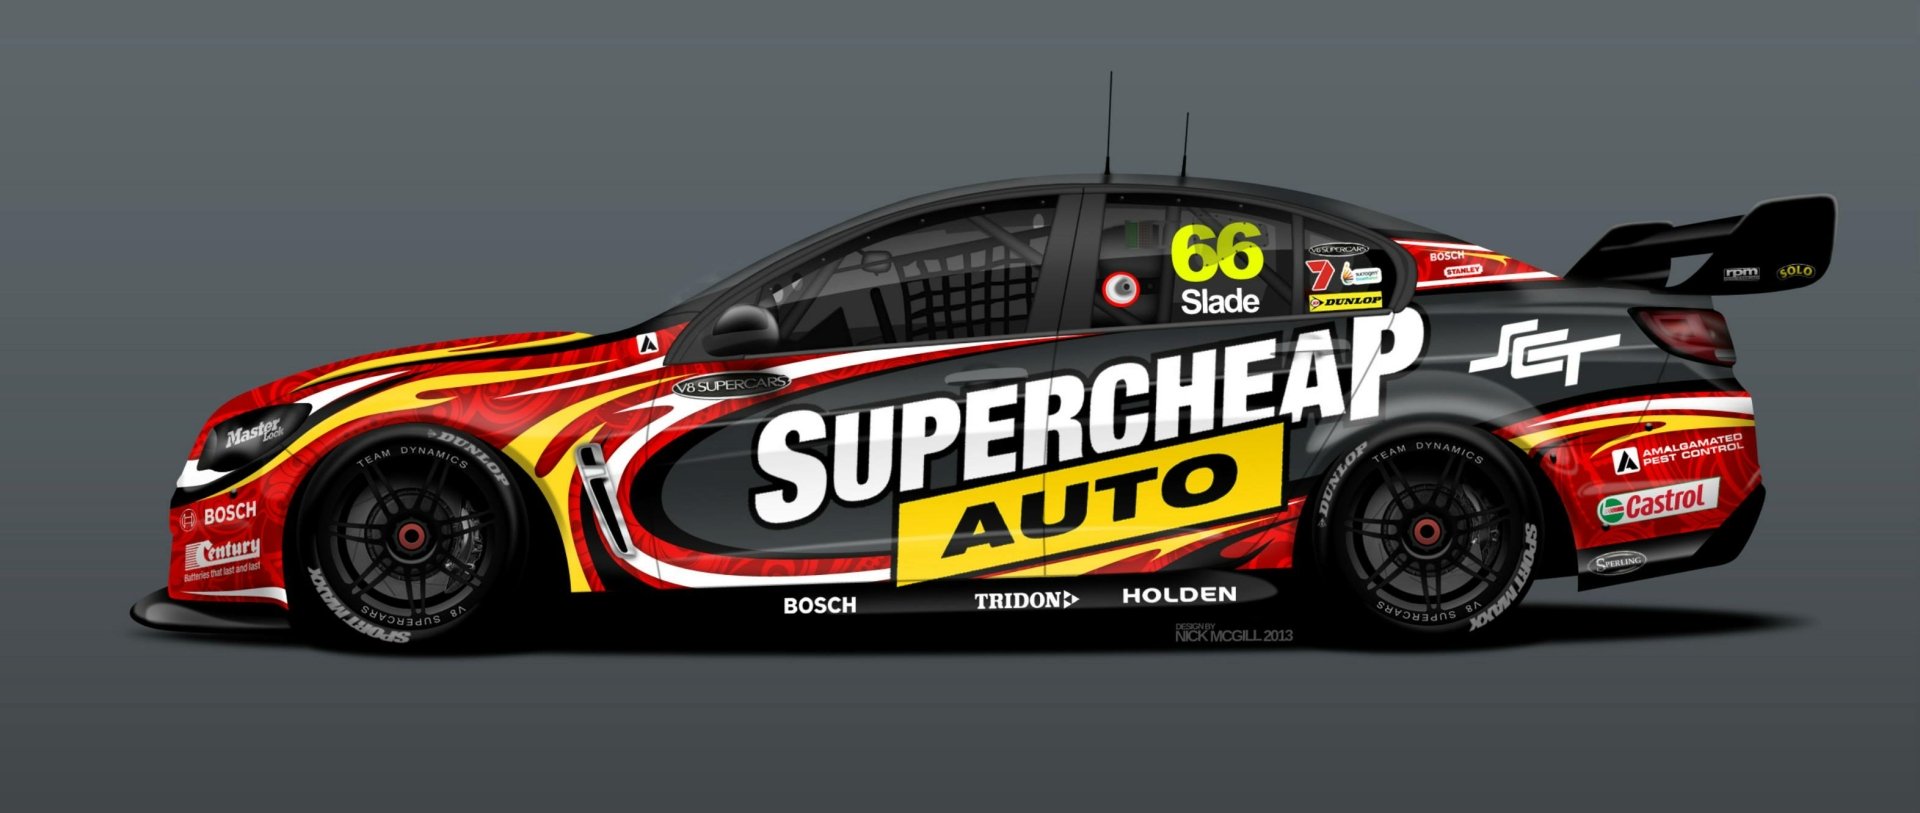 27+ V8 Supercars Wallpaper 2020 PNG